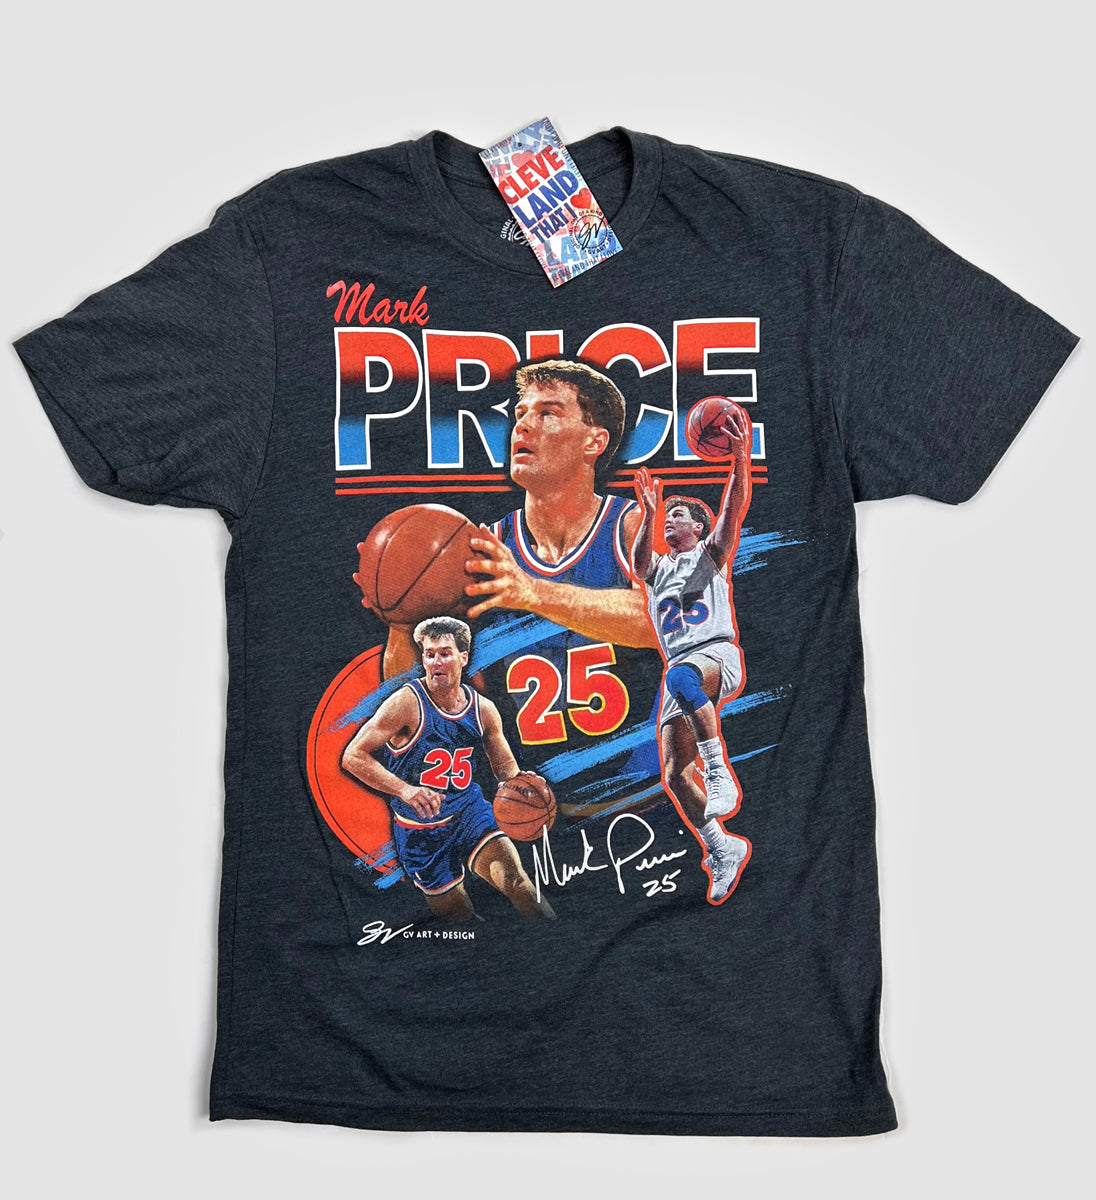 Vintage Cleveland Cavs NBA T-Shirt